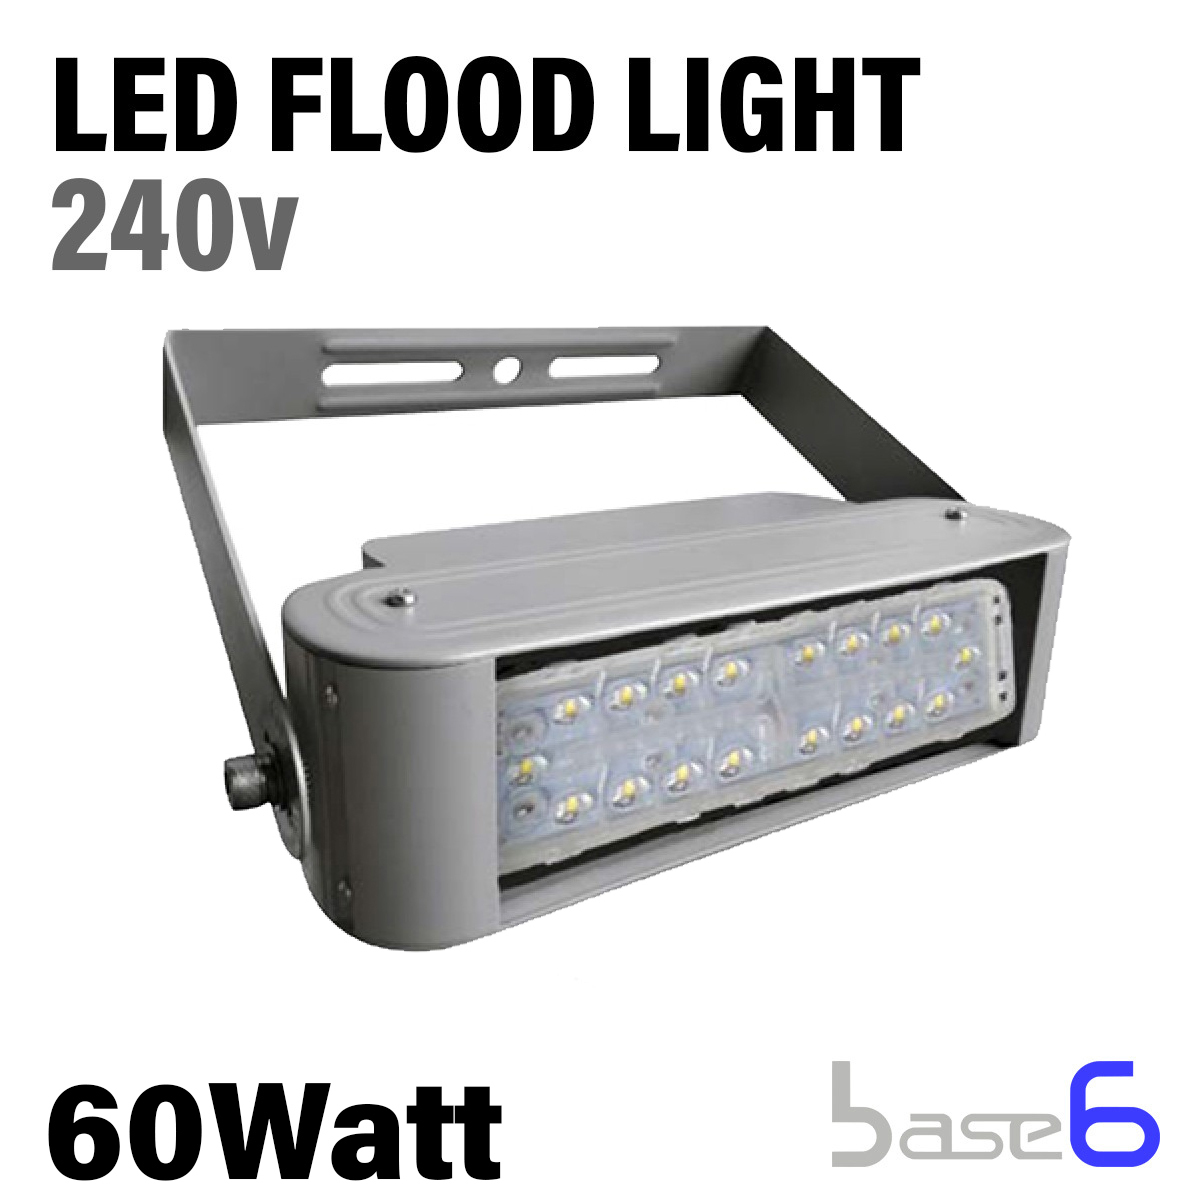 60 Watt LED Modular Flood light